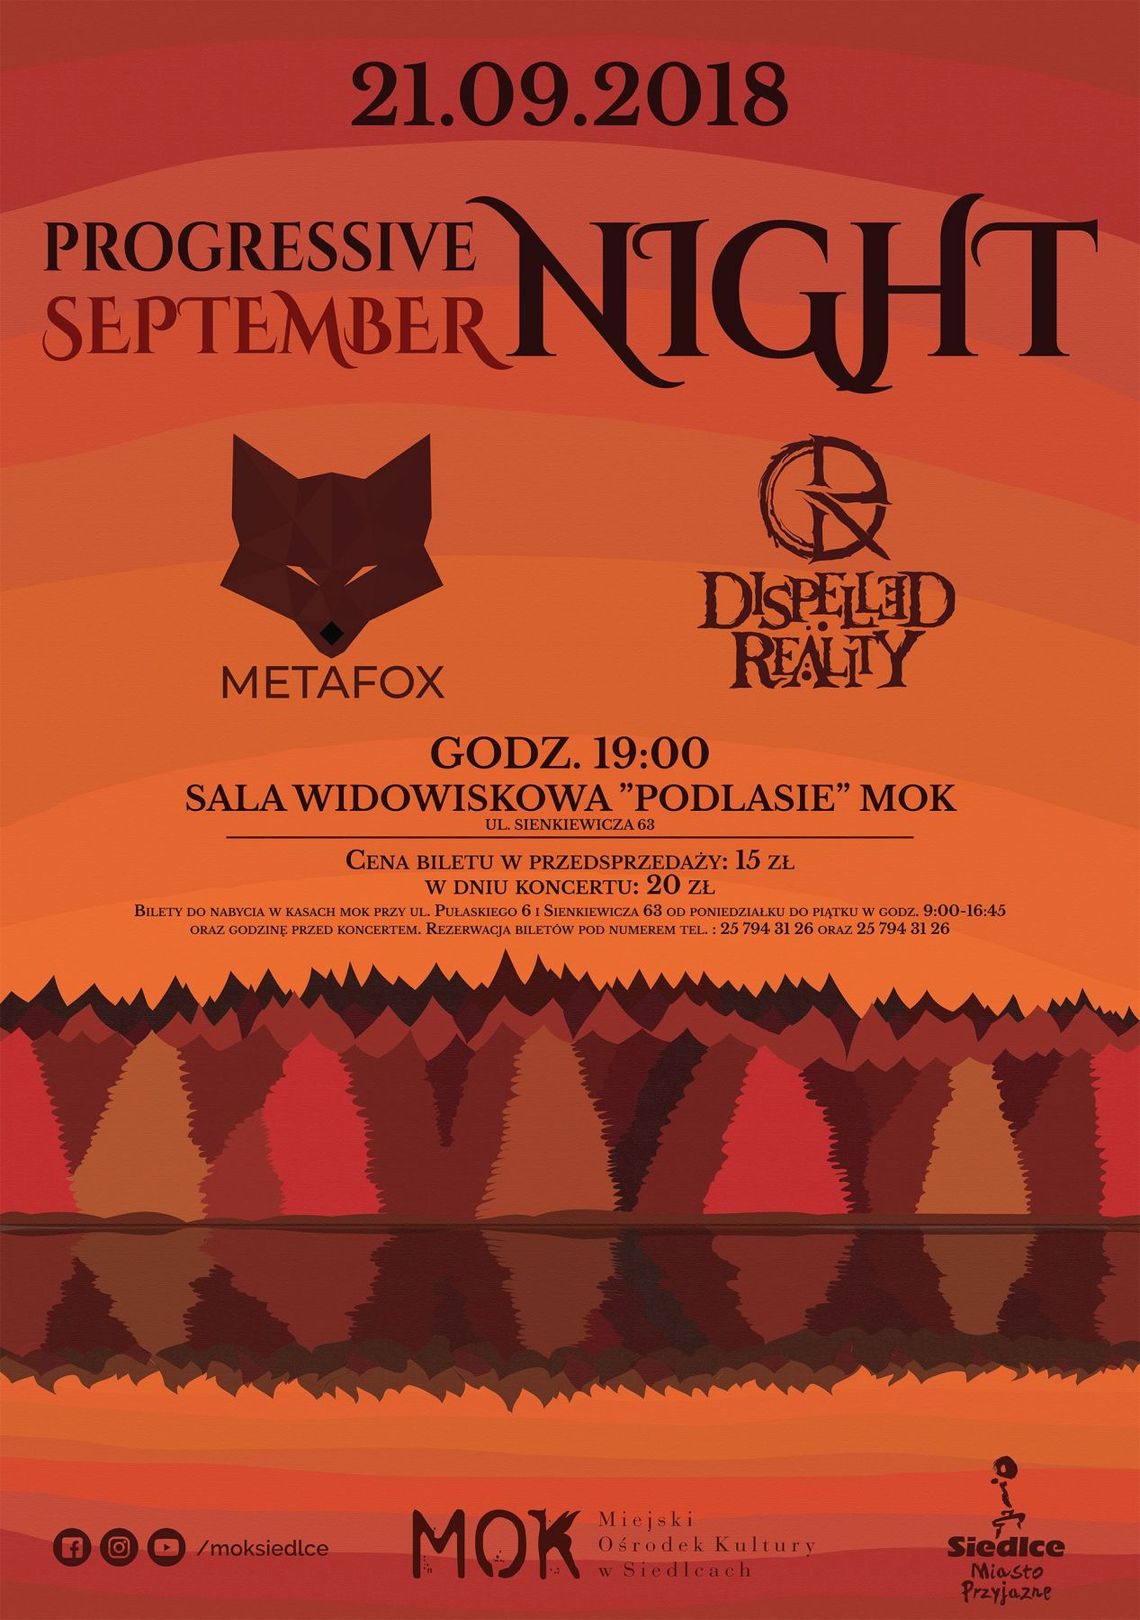 Progressive September Night - koncert Metafox i Dispelled Reality